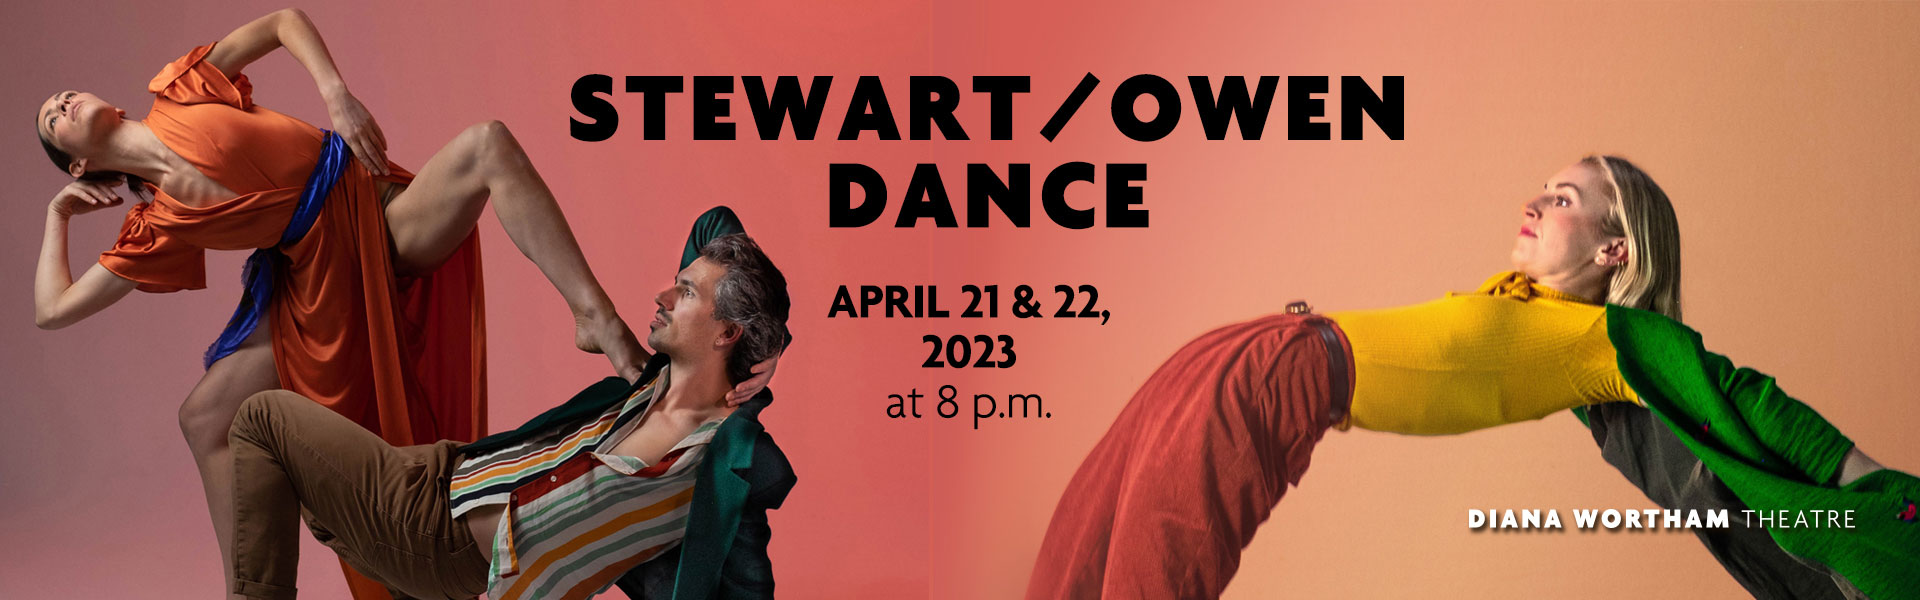 Stewart/Owen Dance, April 21 & 22, 2023 at 8 p.m.